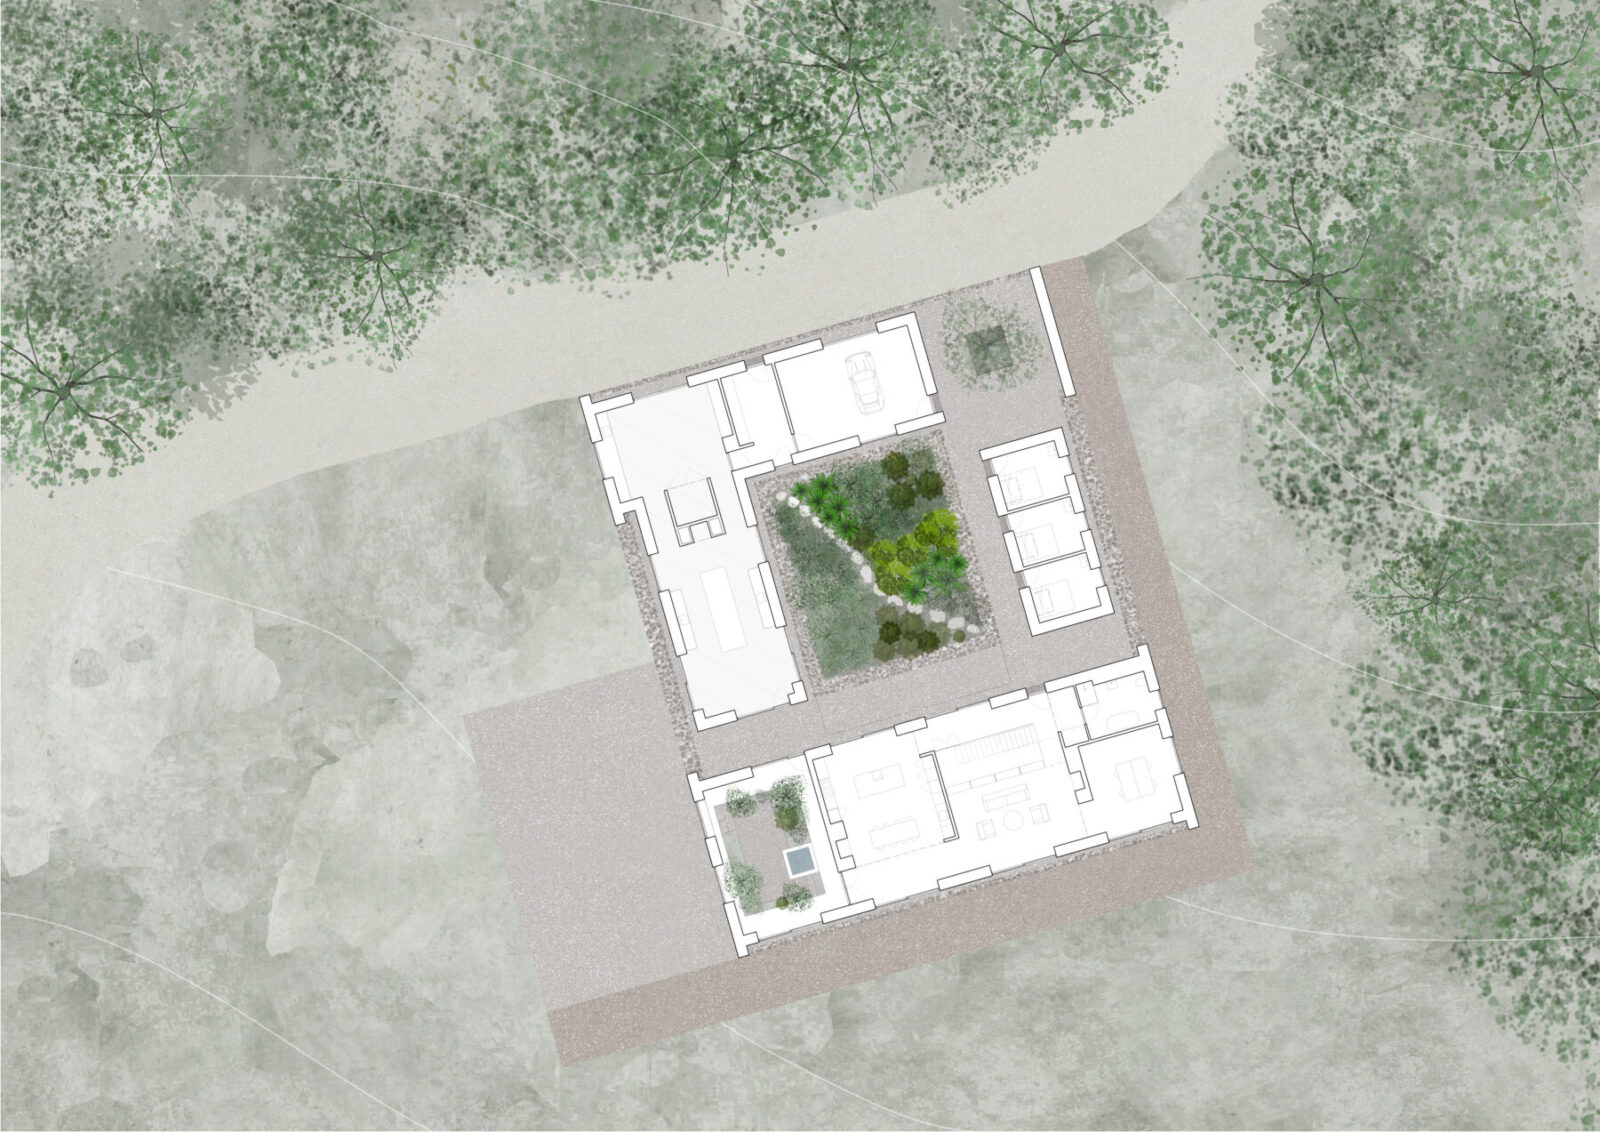 Archisearch Aastrup Garden farm house | by NORRØN Architects